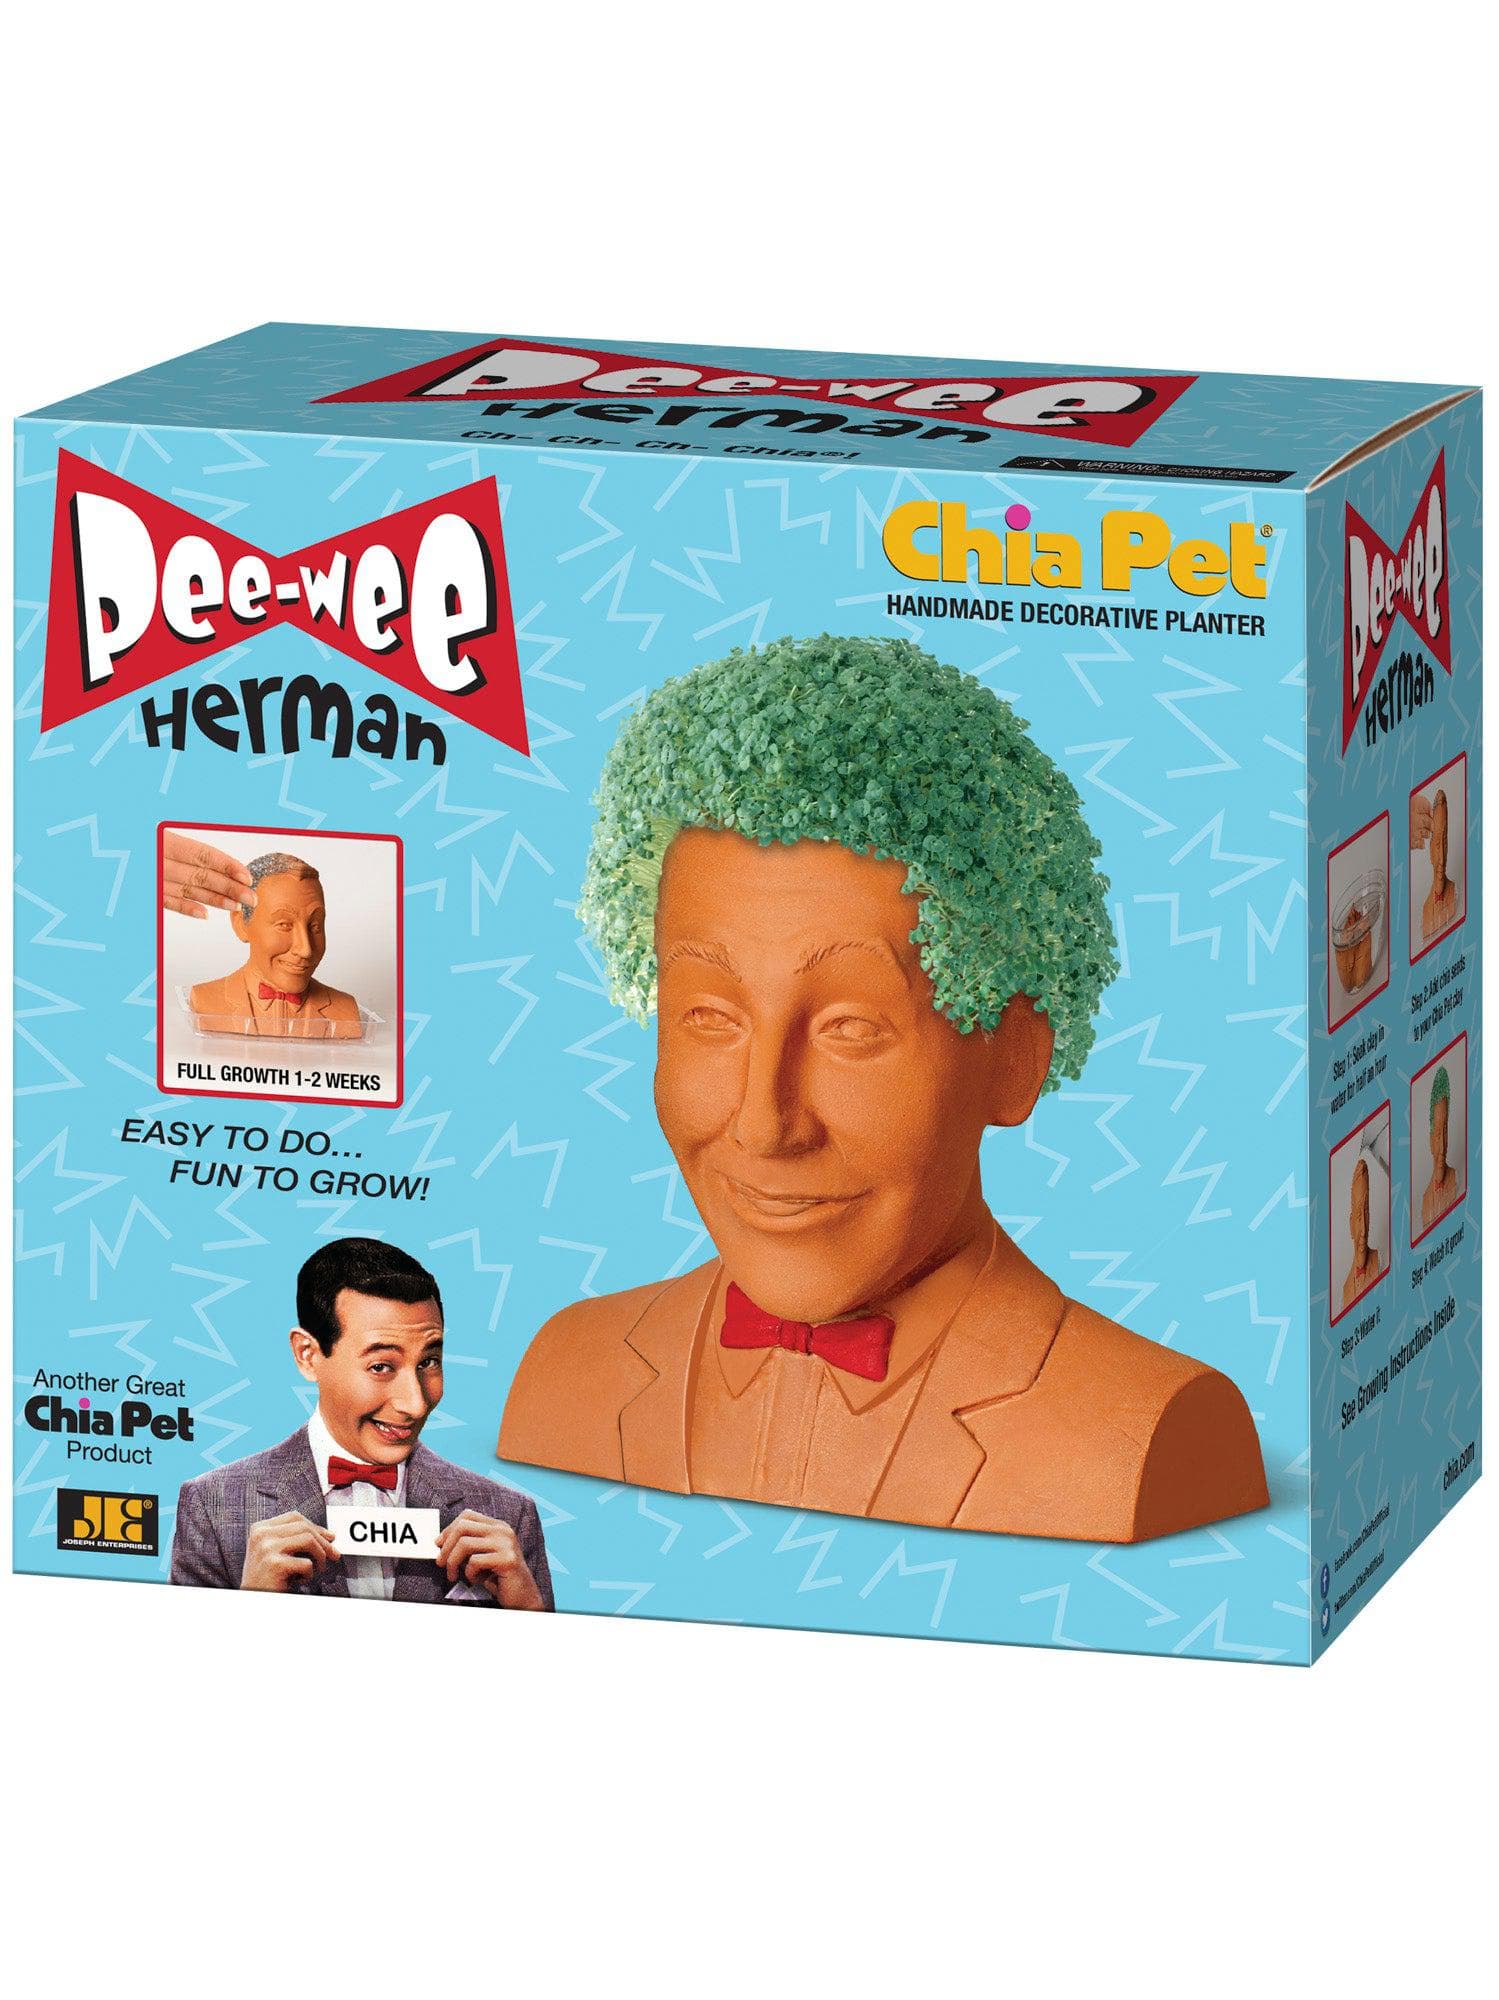 Chia Pet - Pee-wee Herman - Decorative Planter - costumes.com